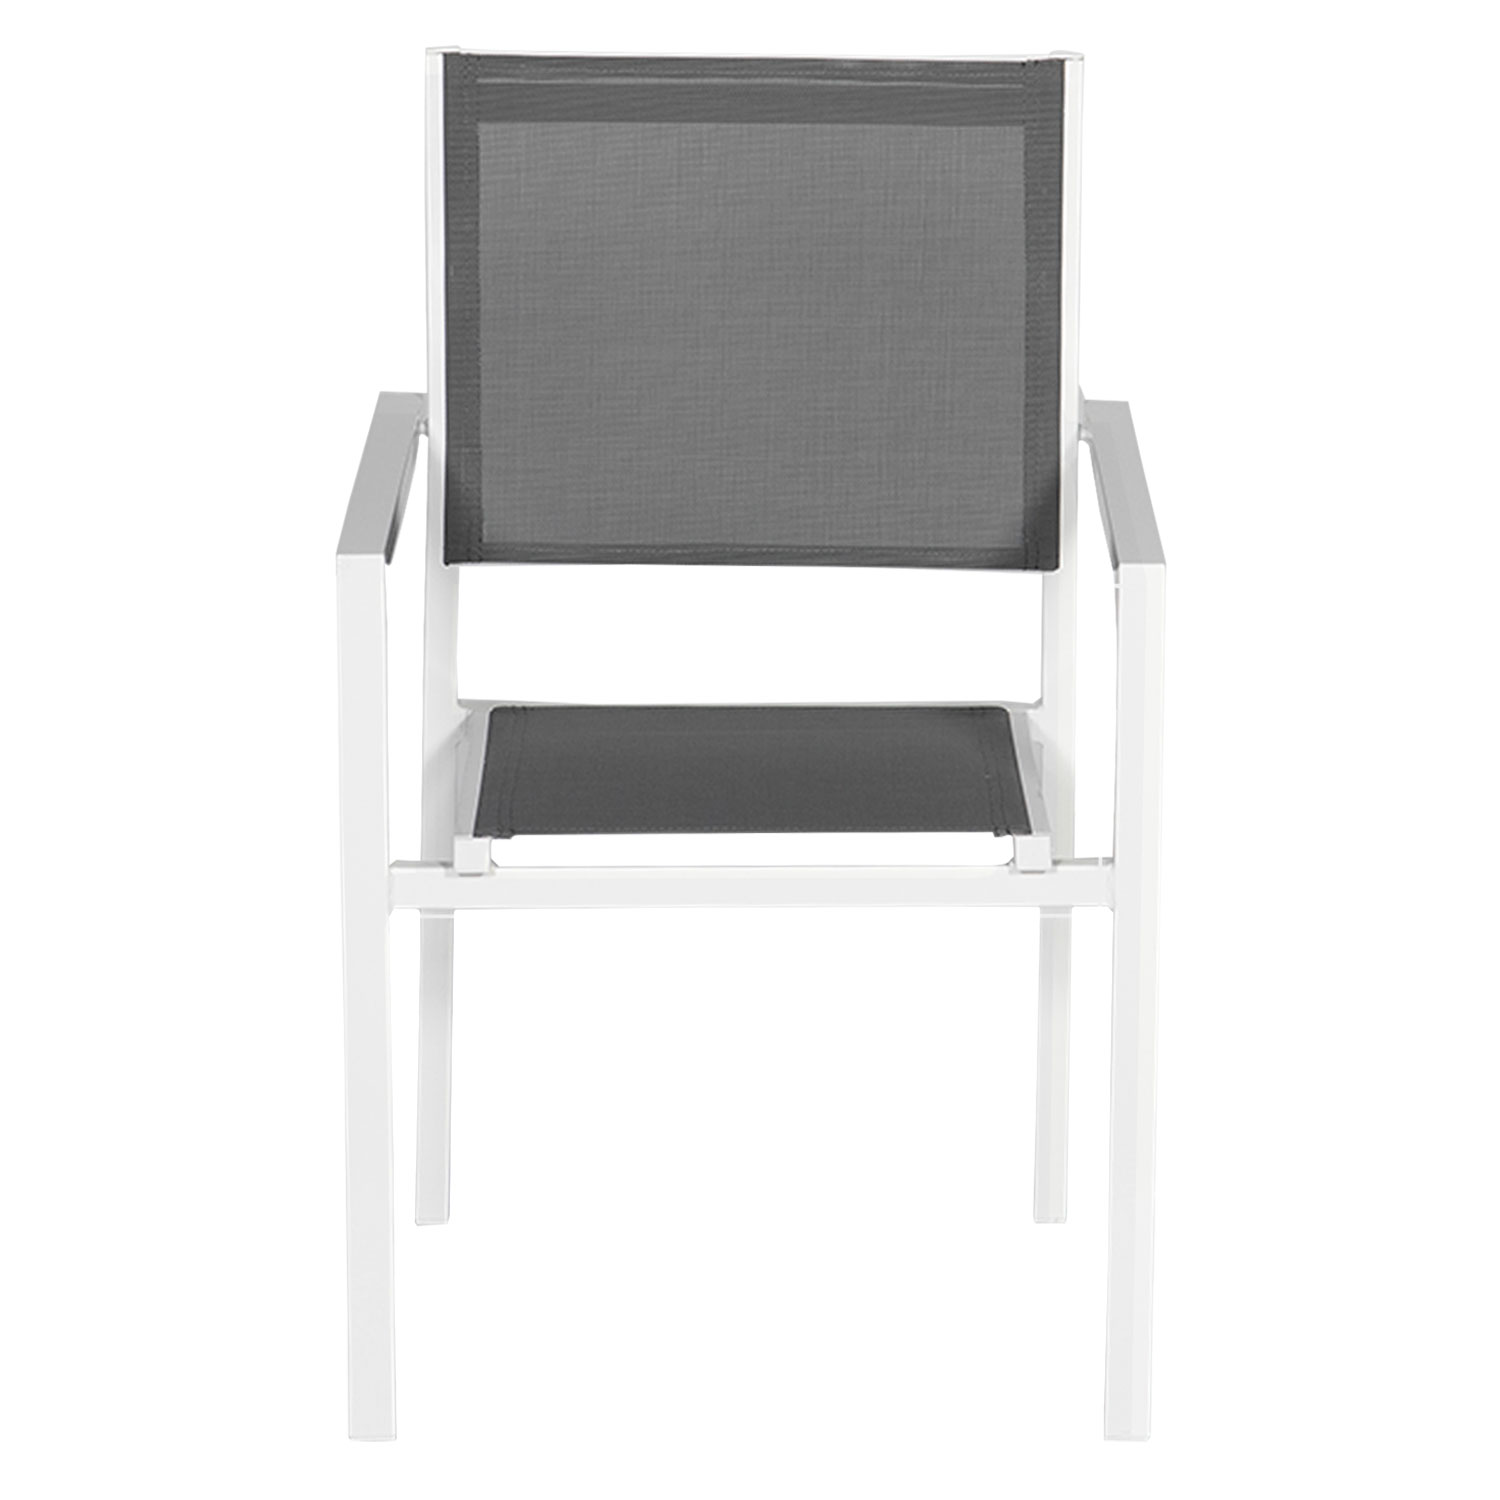 Juego de 10 sillas de aluminio blanco - textileno gris